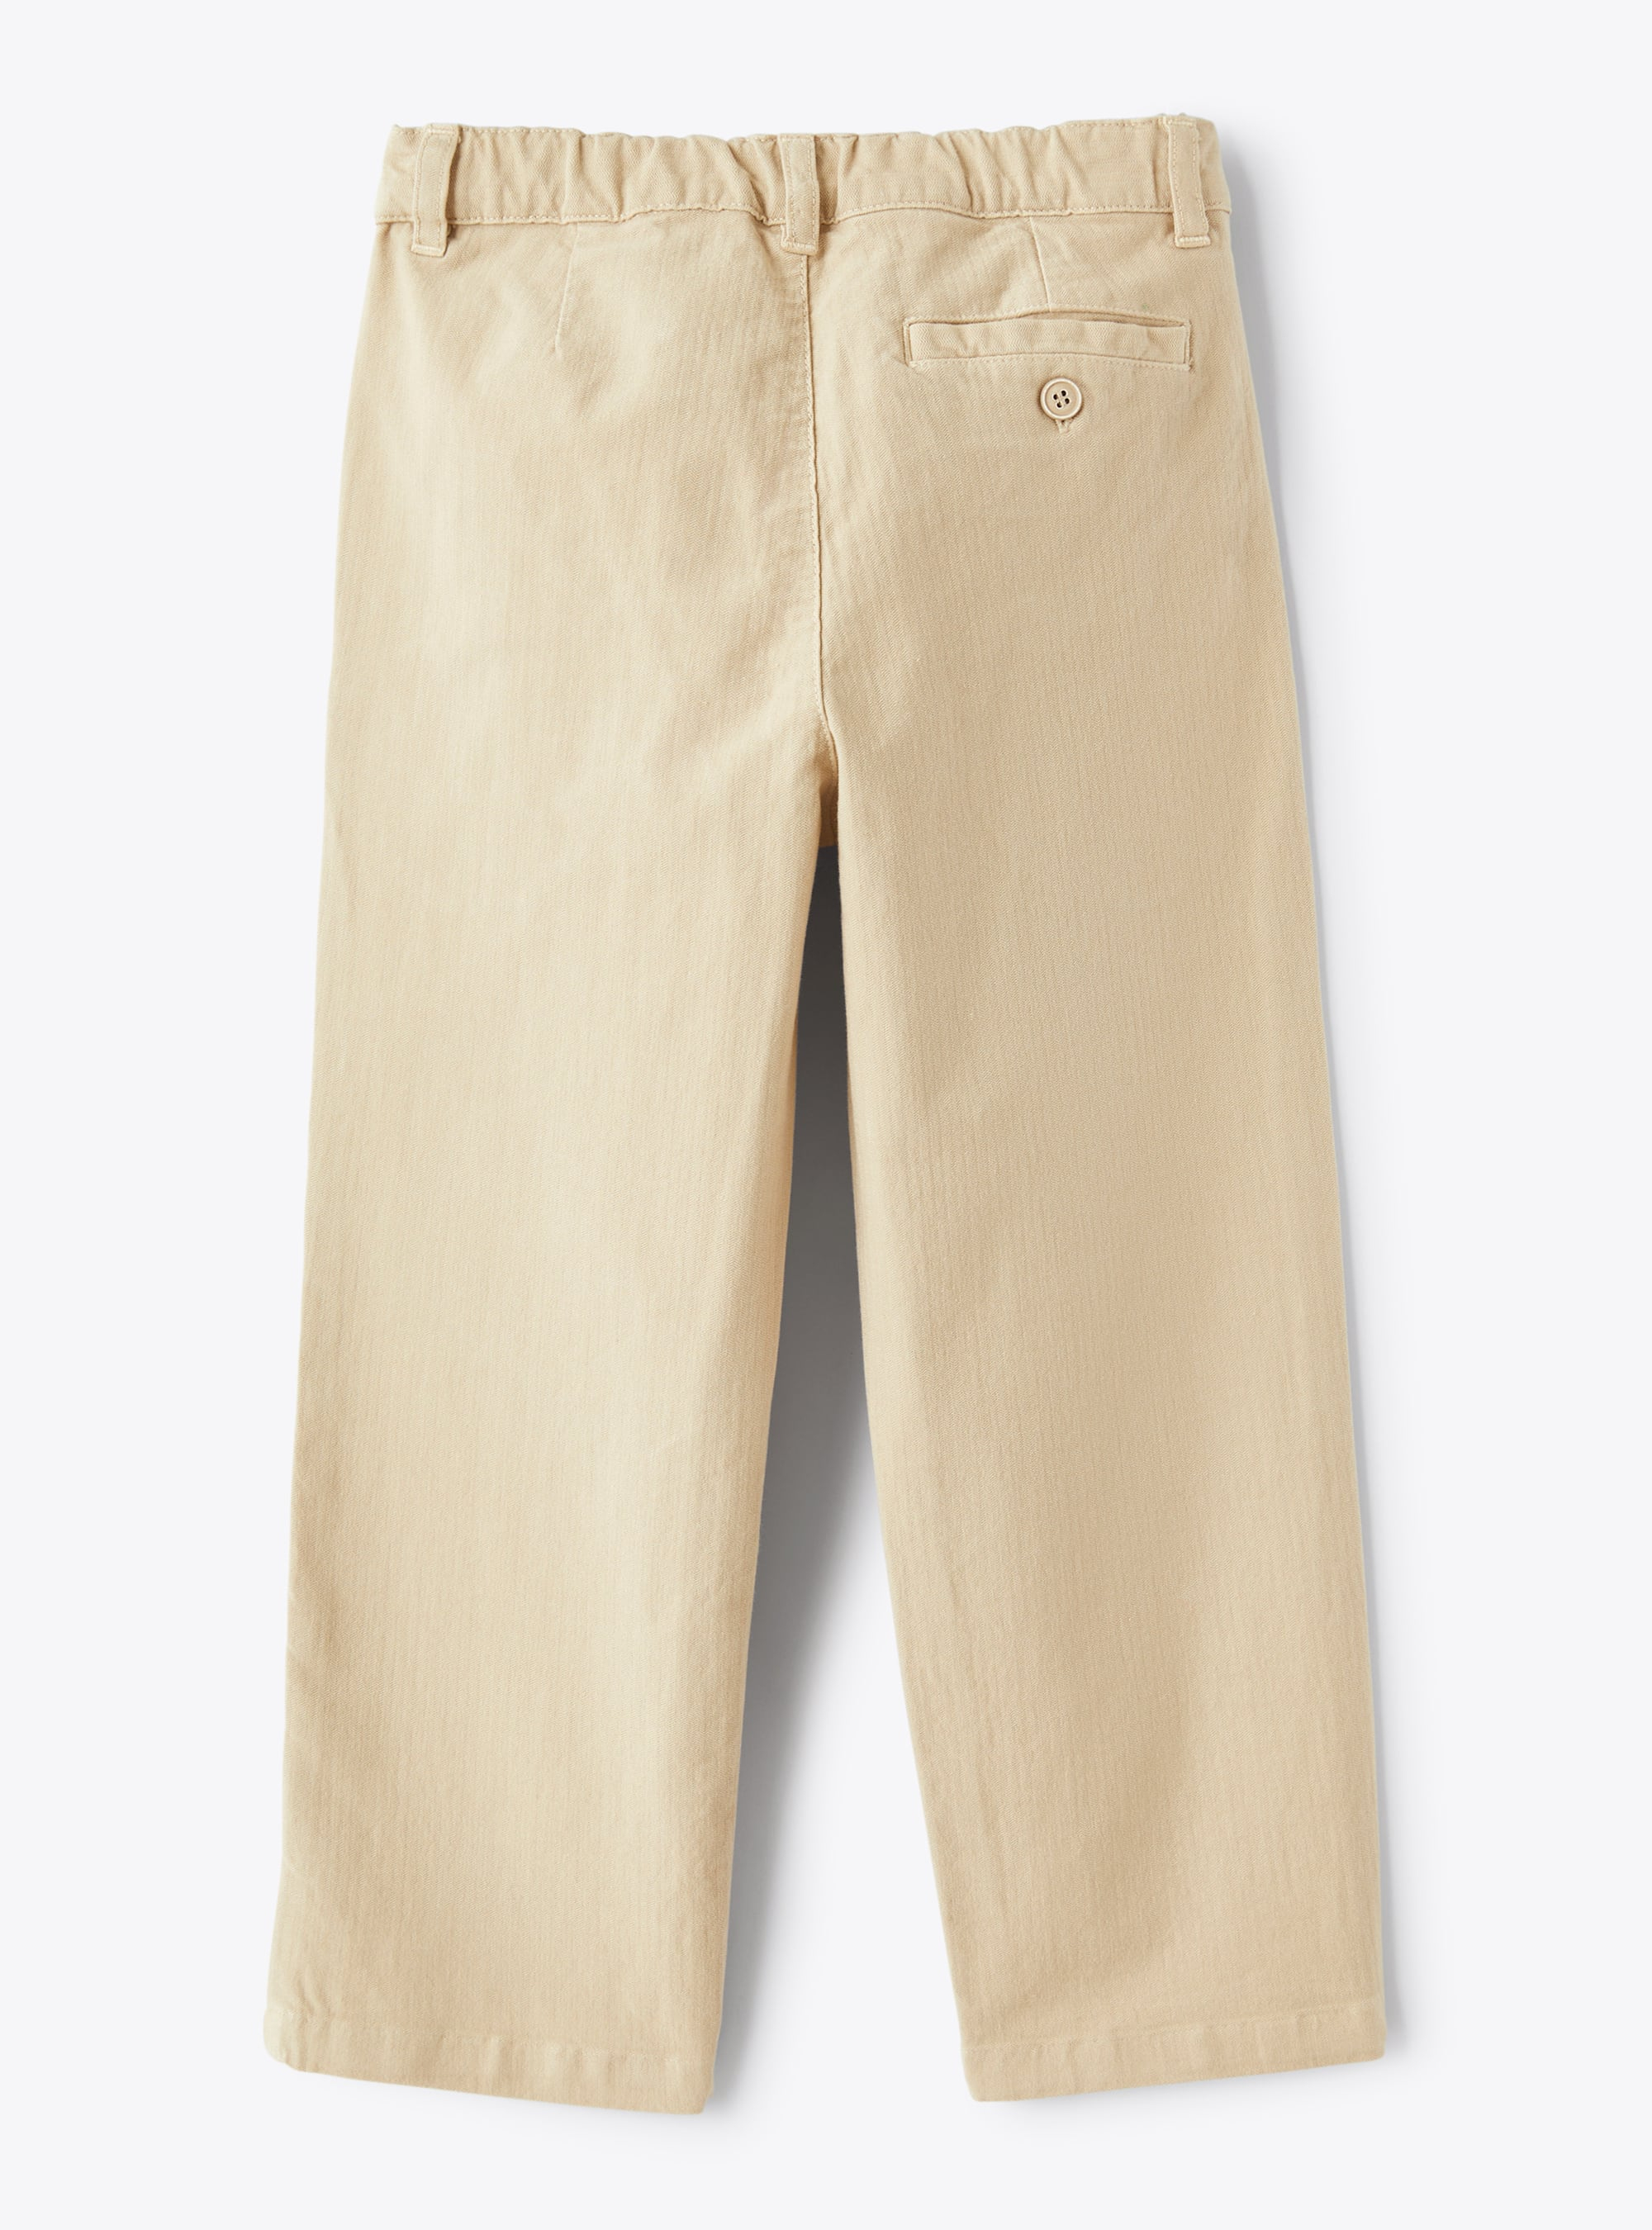 Longline trousers in herringbone-patterned stretch cotton - Brown | Il Gufo